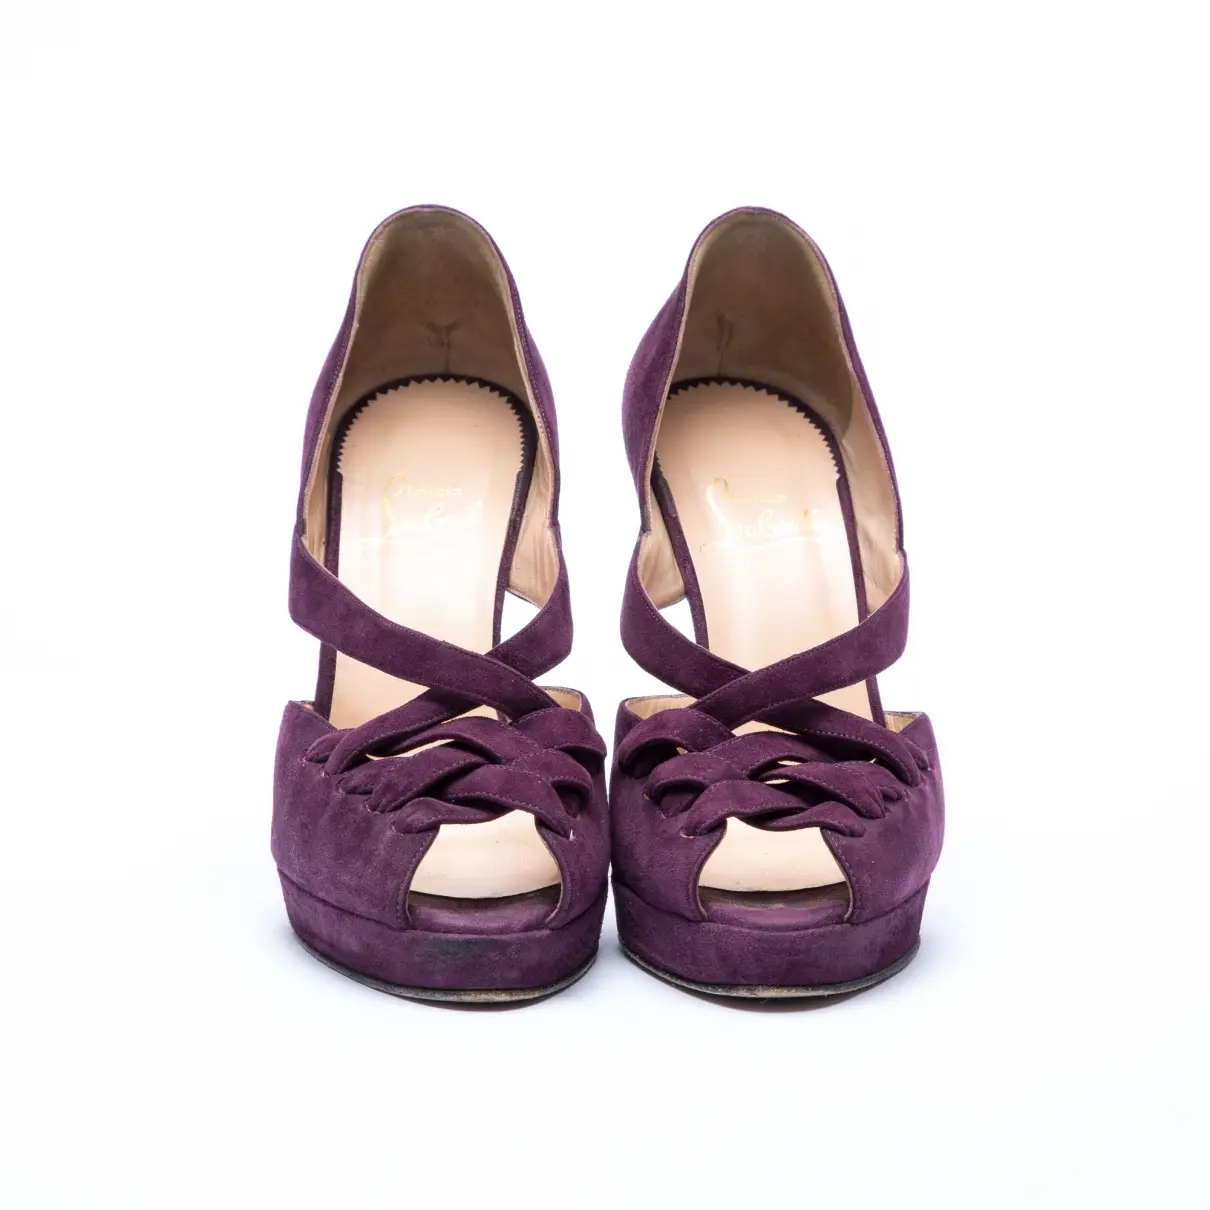 Buy Christian Louboutin Lady Peep heels online